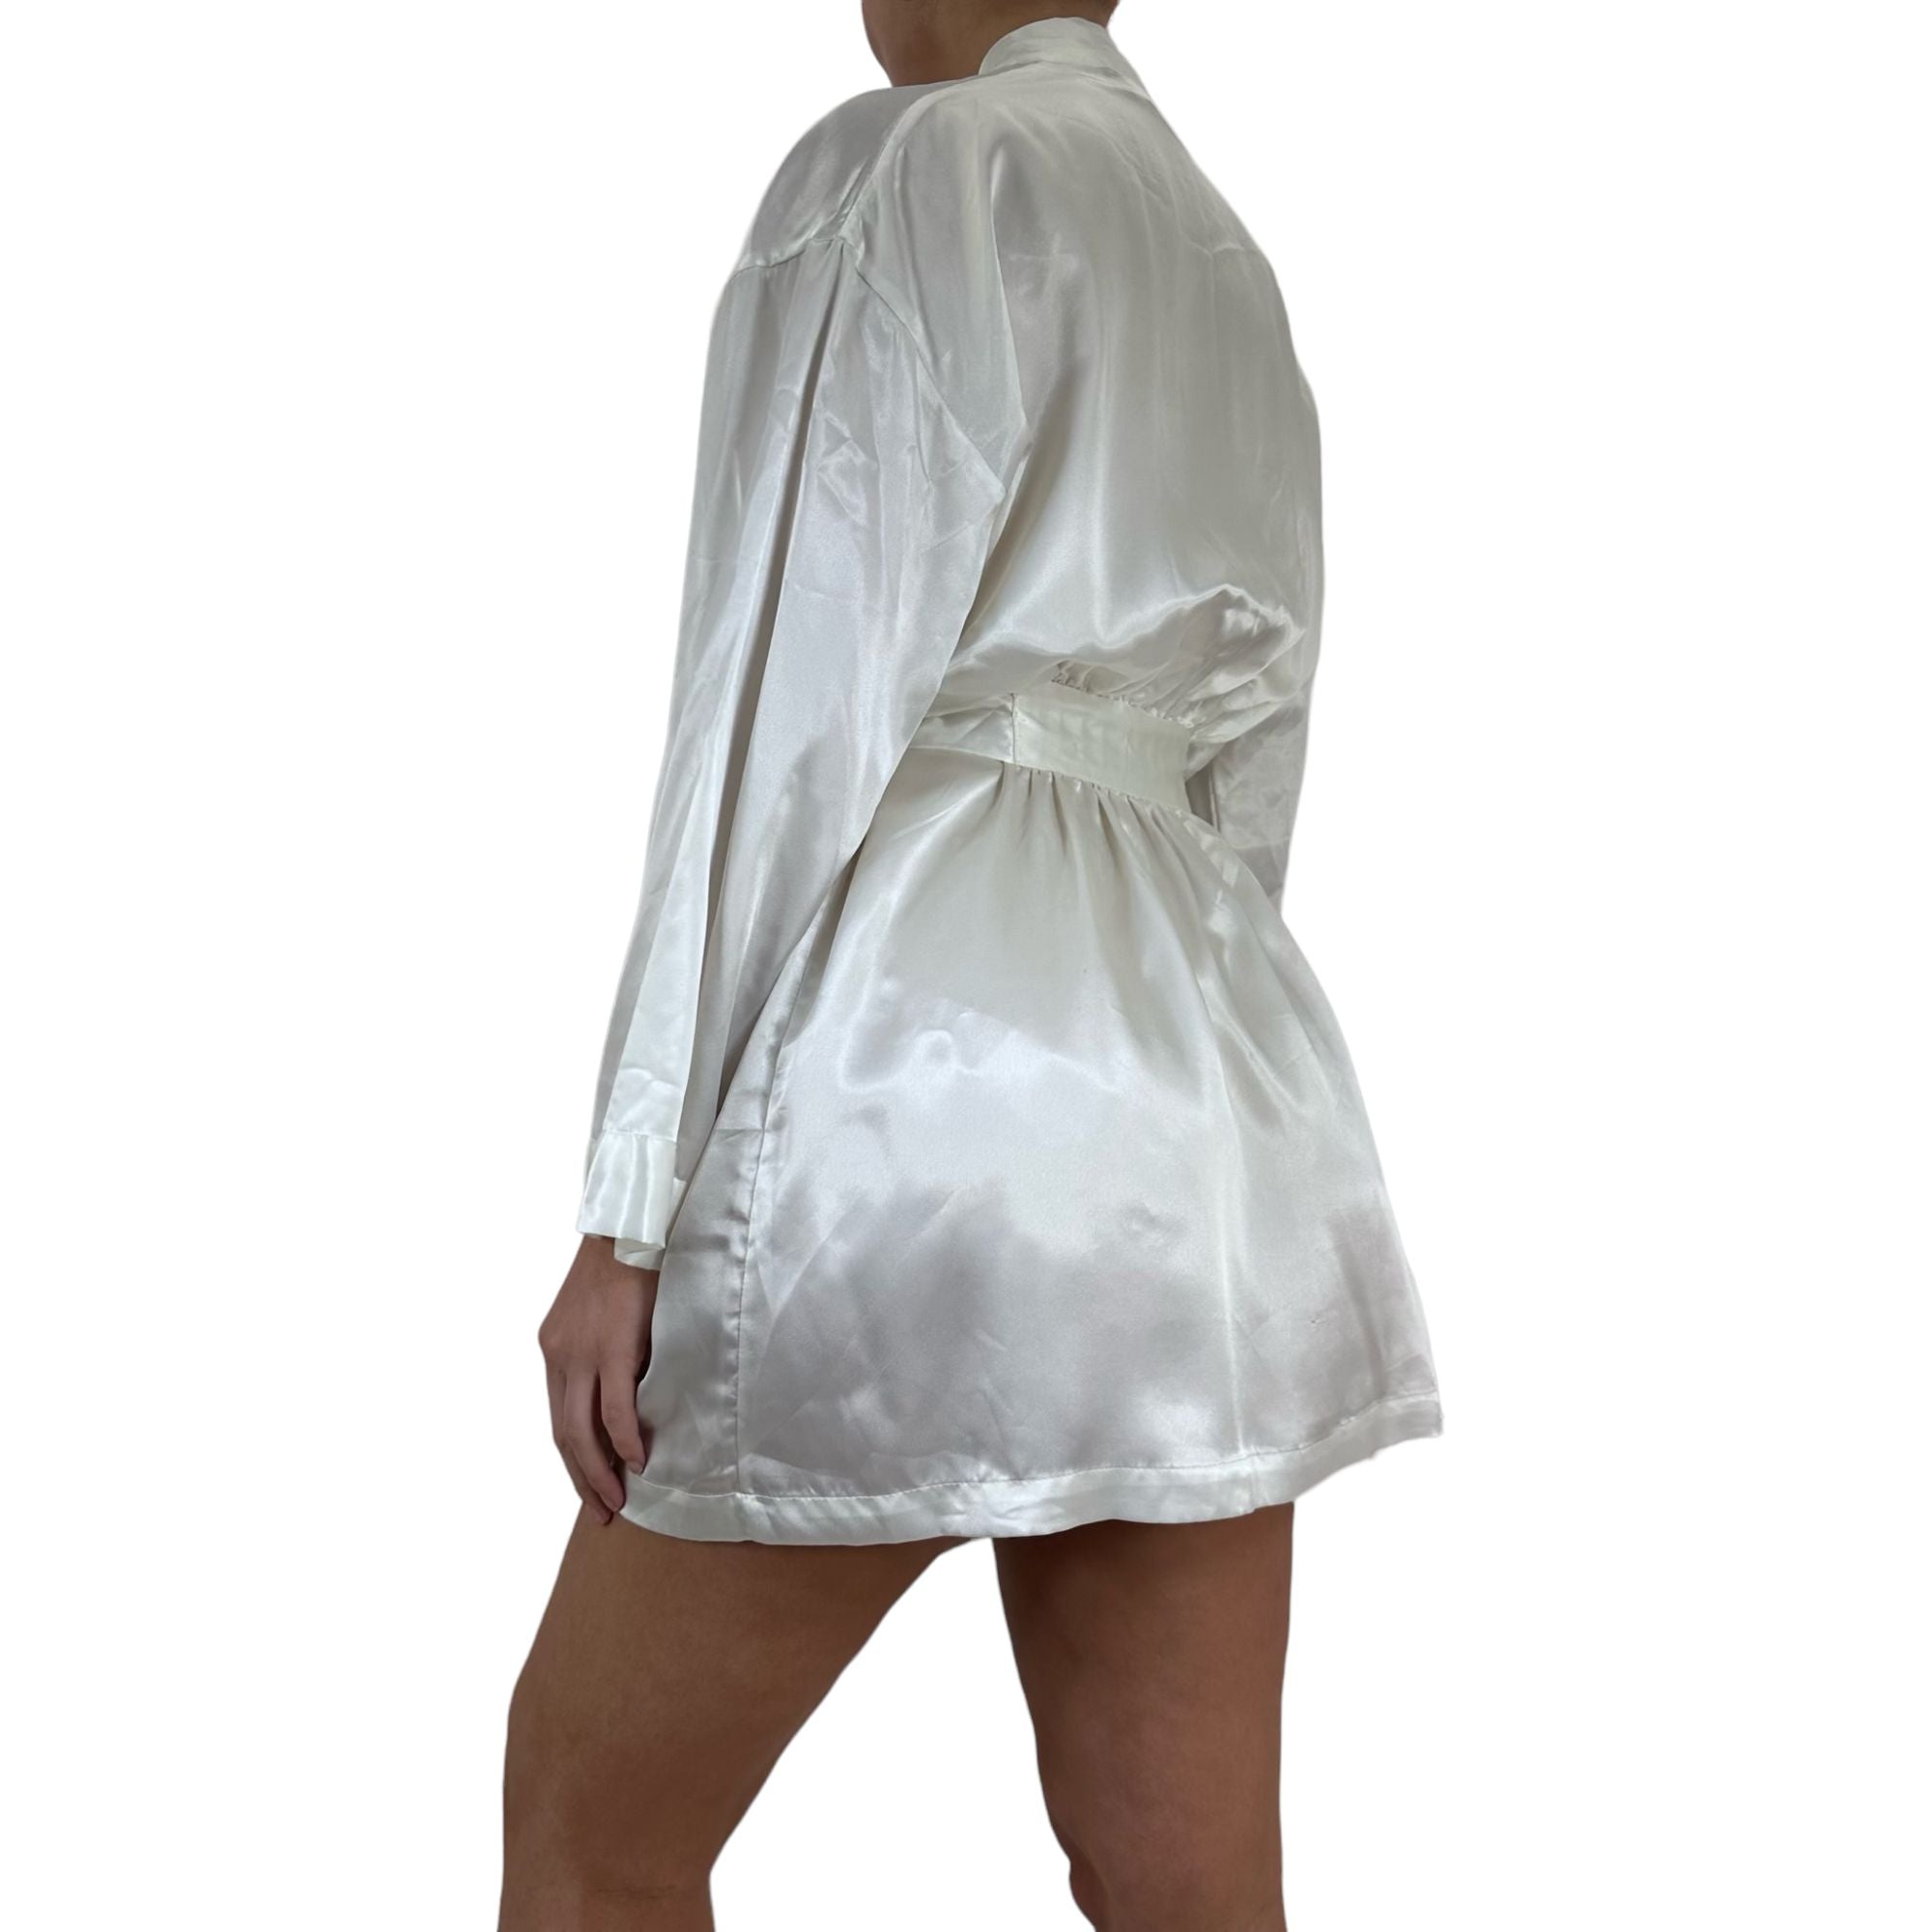 Y2k Vintage Victoria's Secret White Satin Robe [M-L]